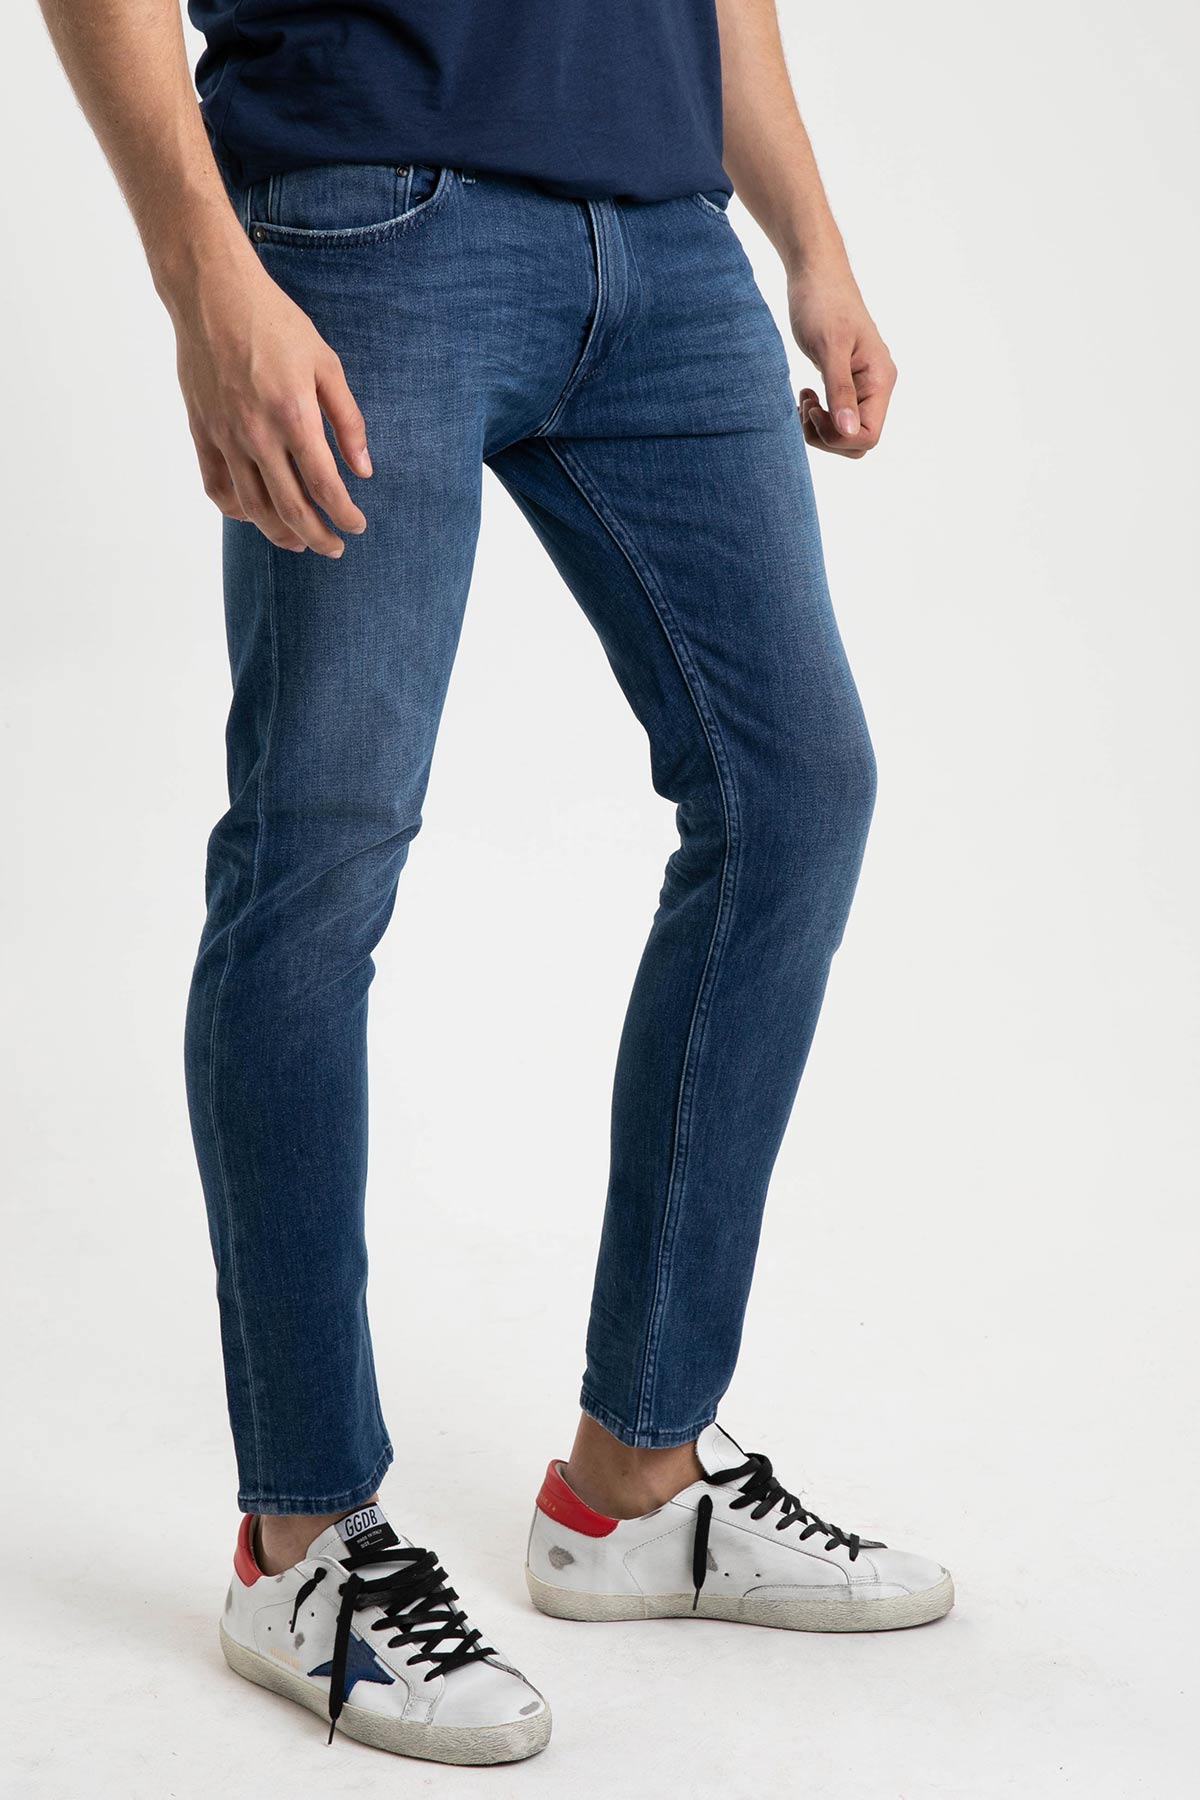 Replay X-Lite Jondrill Skinny Fit Jeans-Libas Trendy Fashion Store